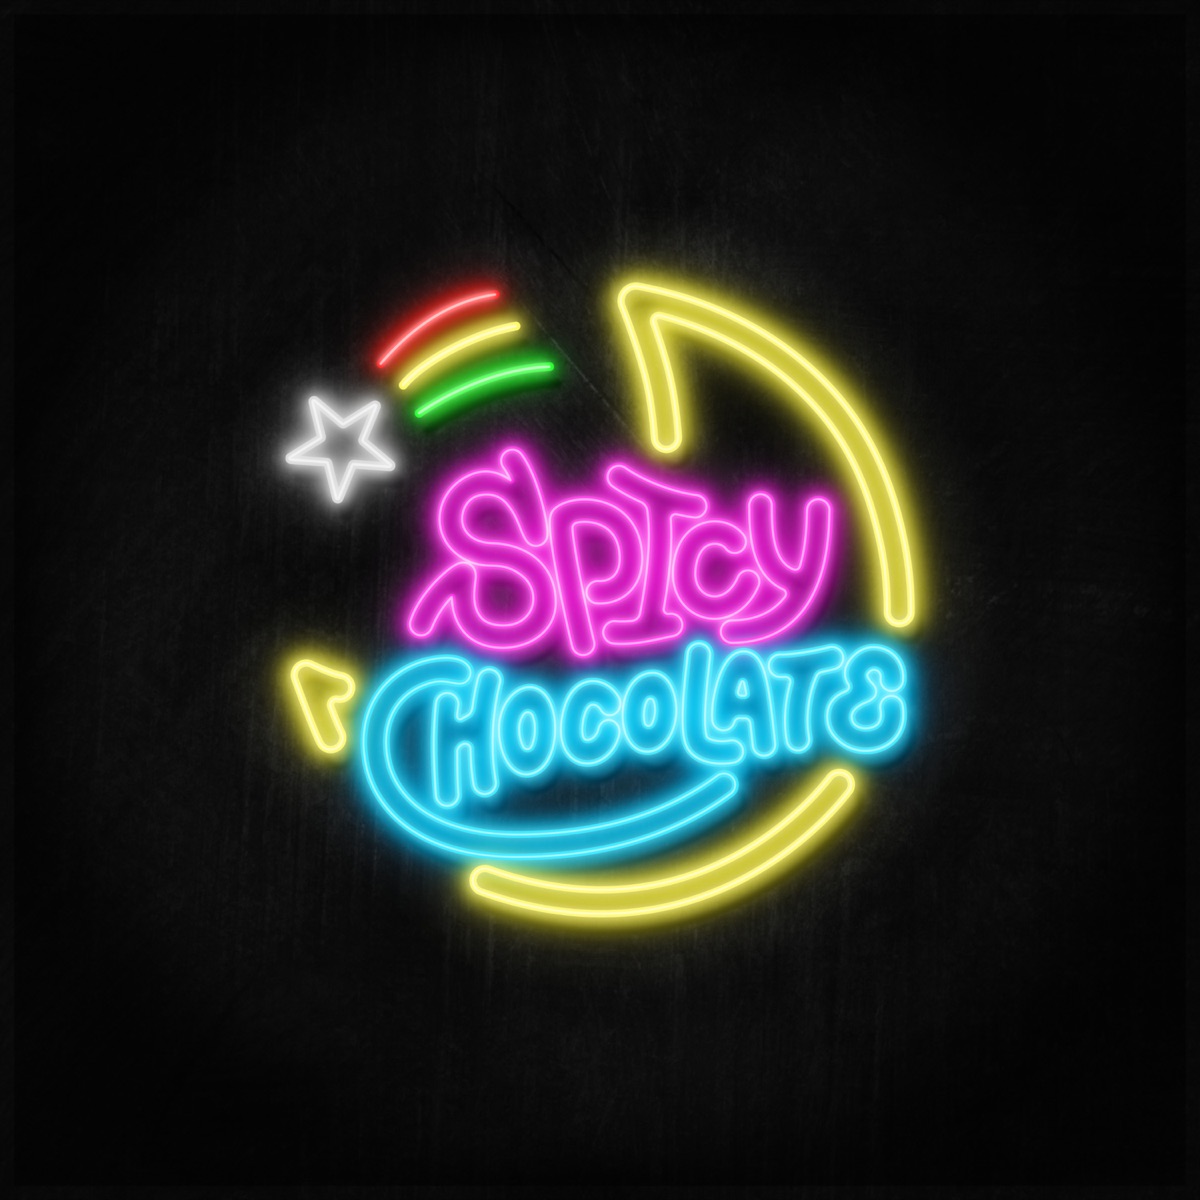 『SPICY CHOCOLATE - さよならじゃなくて feat. A夏目 & 4na』収録の『さよならじゃなくて feat. A夏目 & 4na』ジャケット